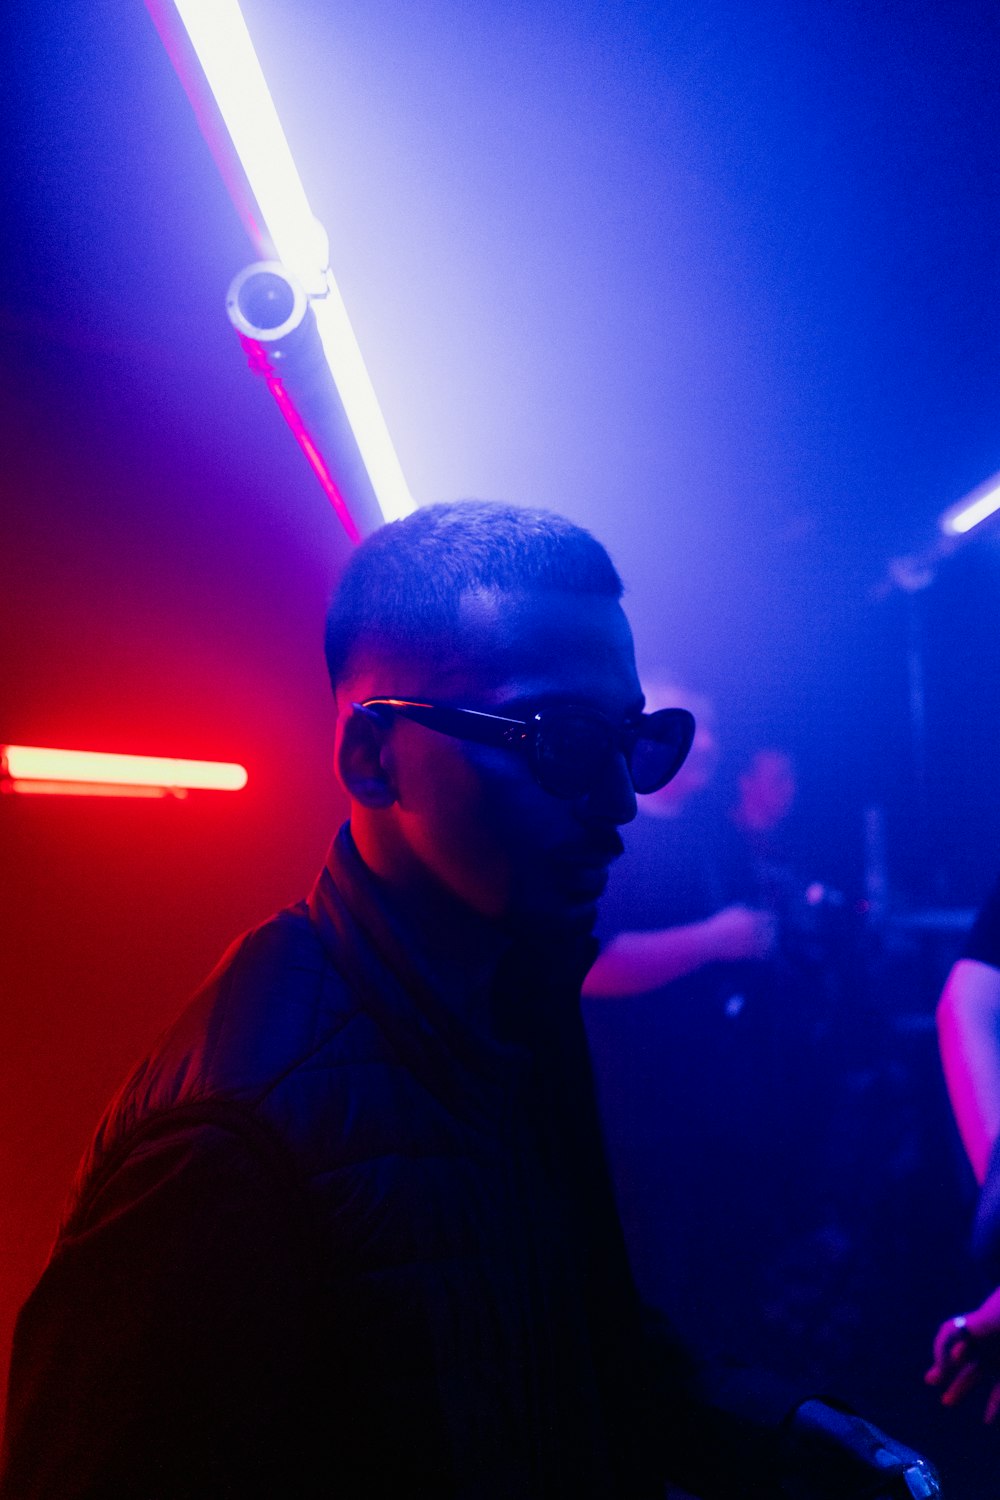 a man in a dark room wearing sunglasses